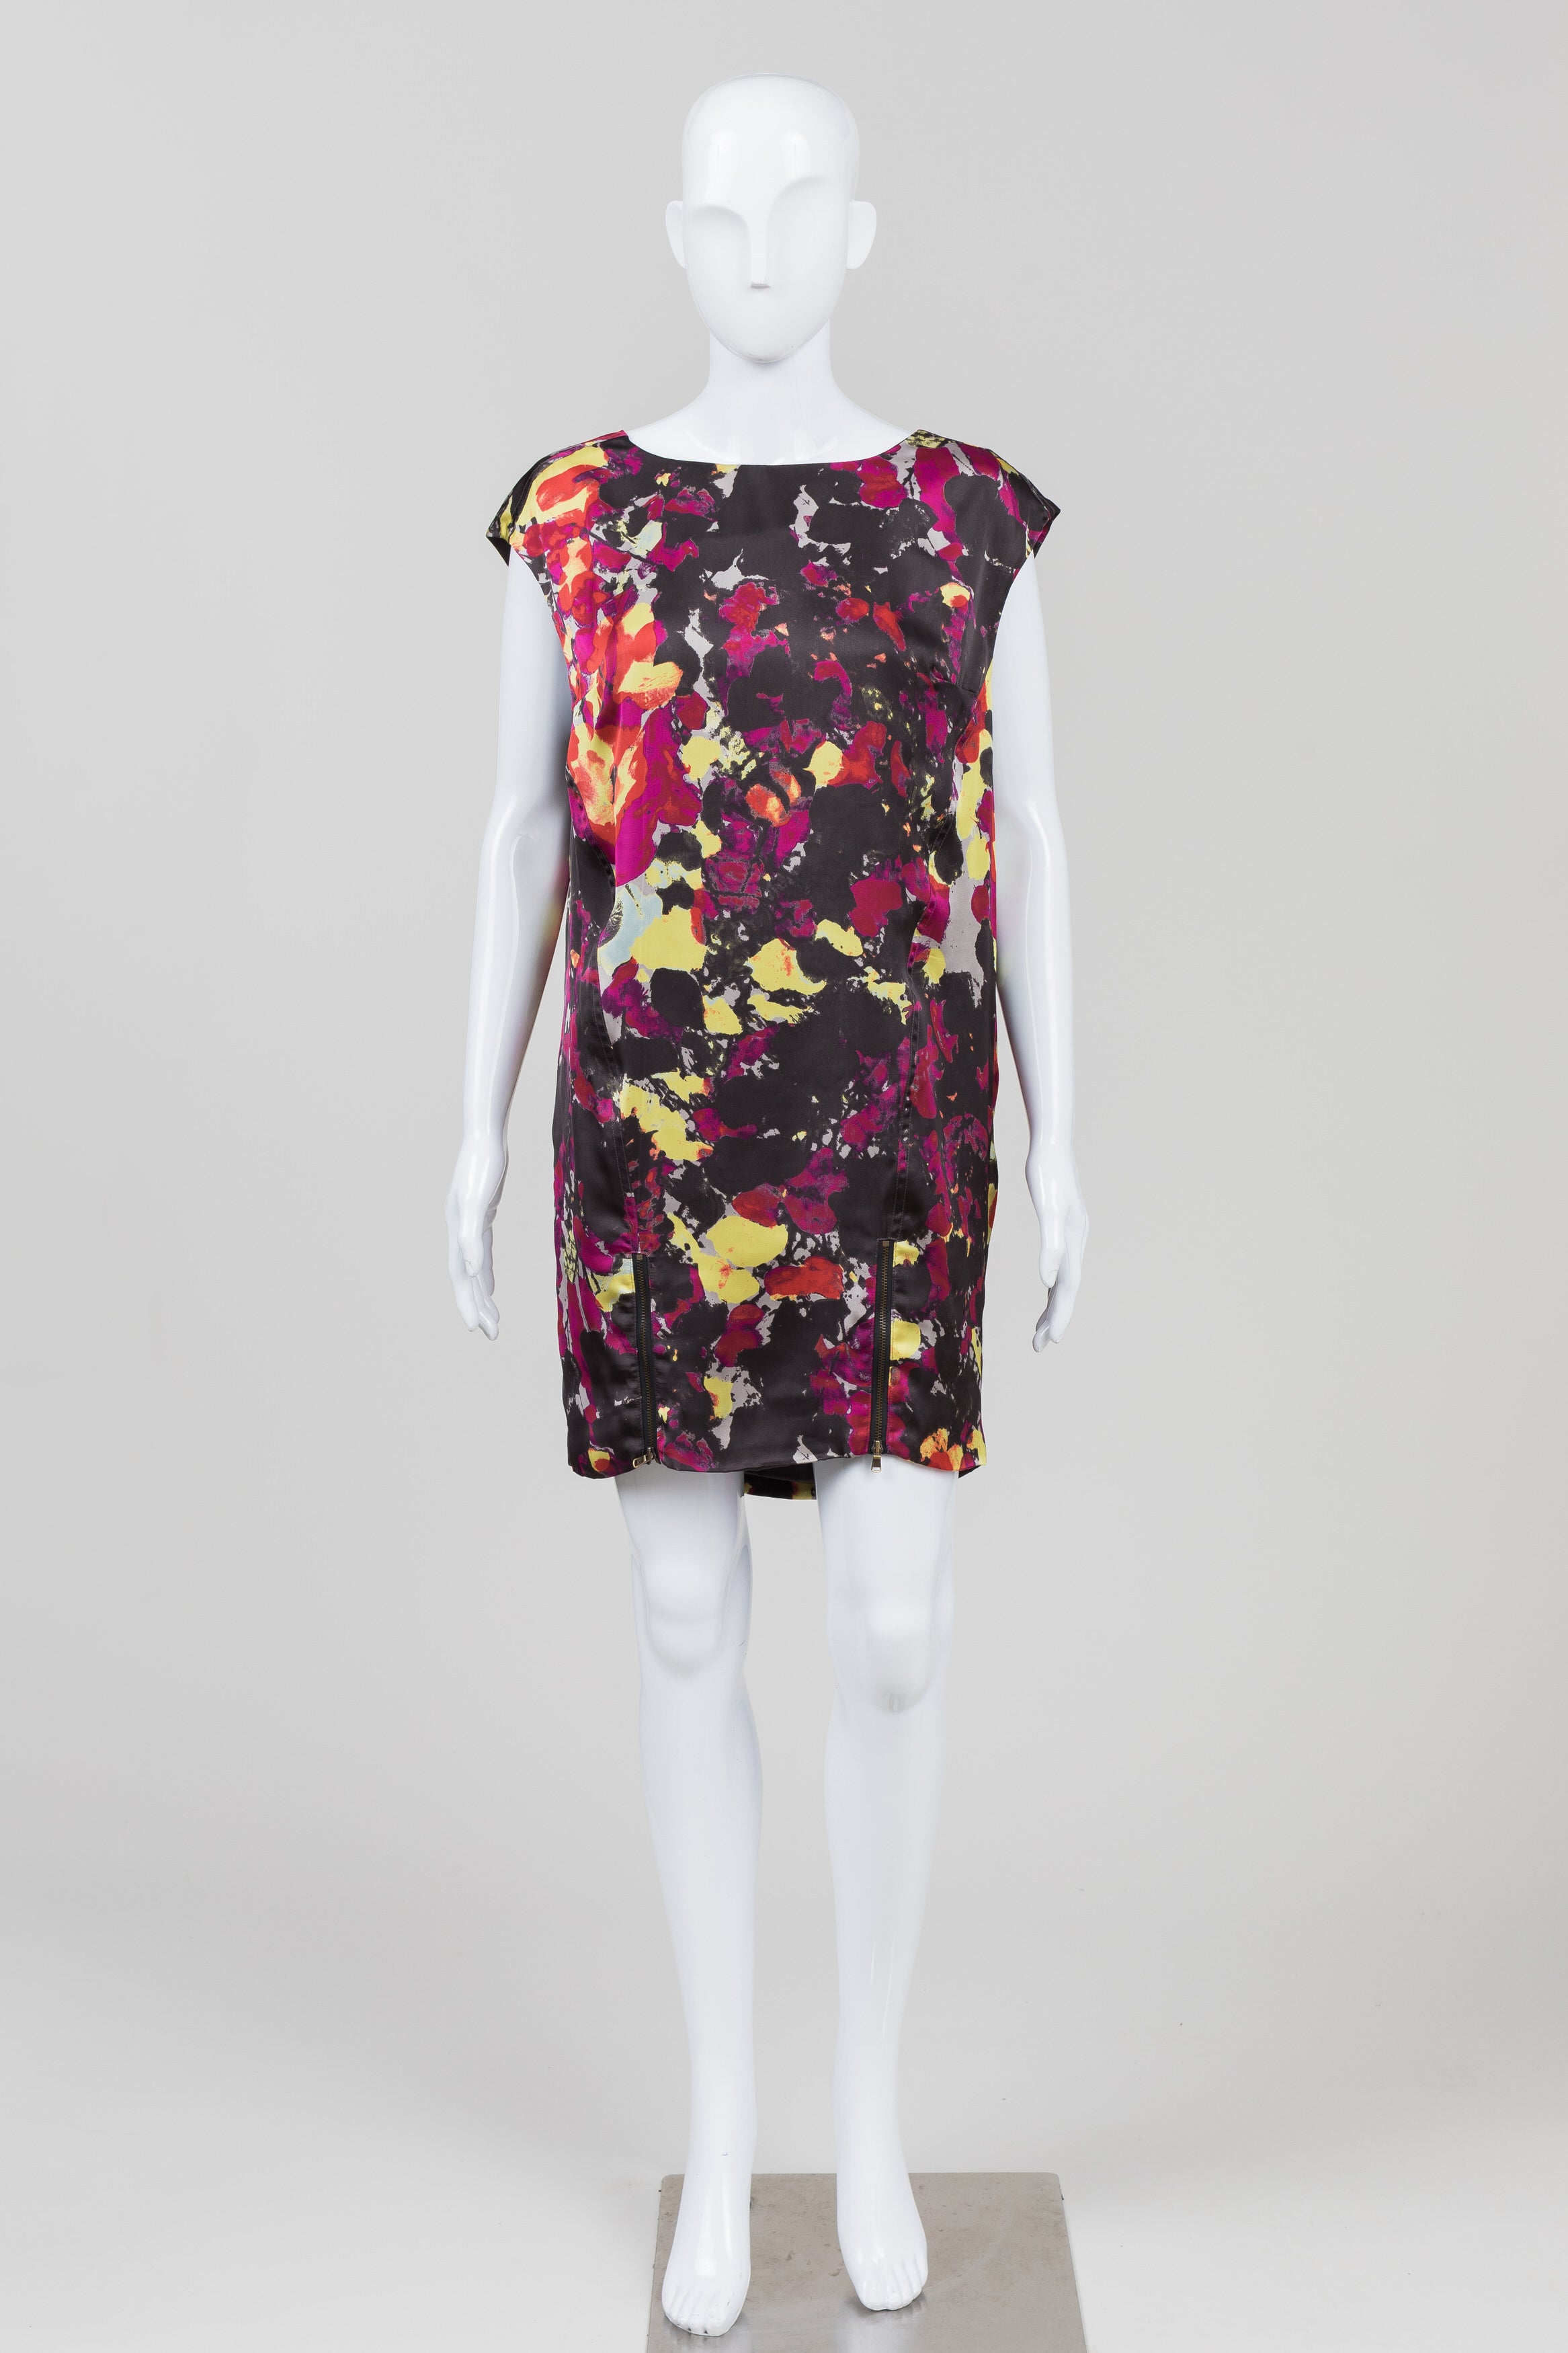 Rachel Roy Black/Purple/Yellow Wedge Dress w/ Zippers (8)